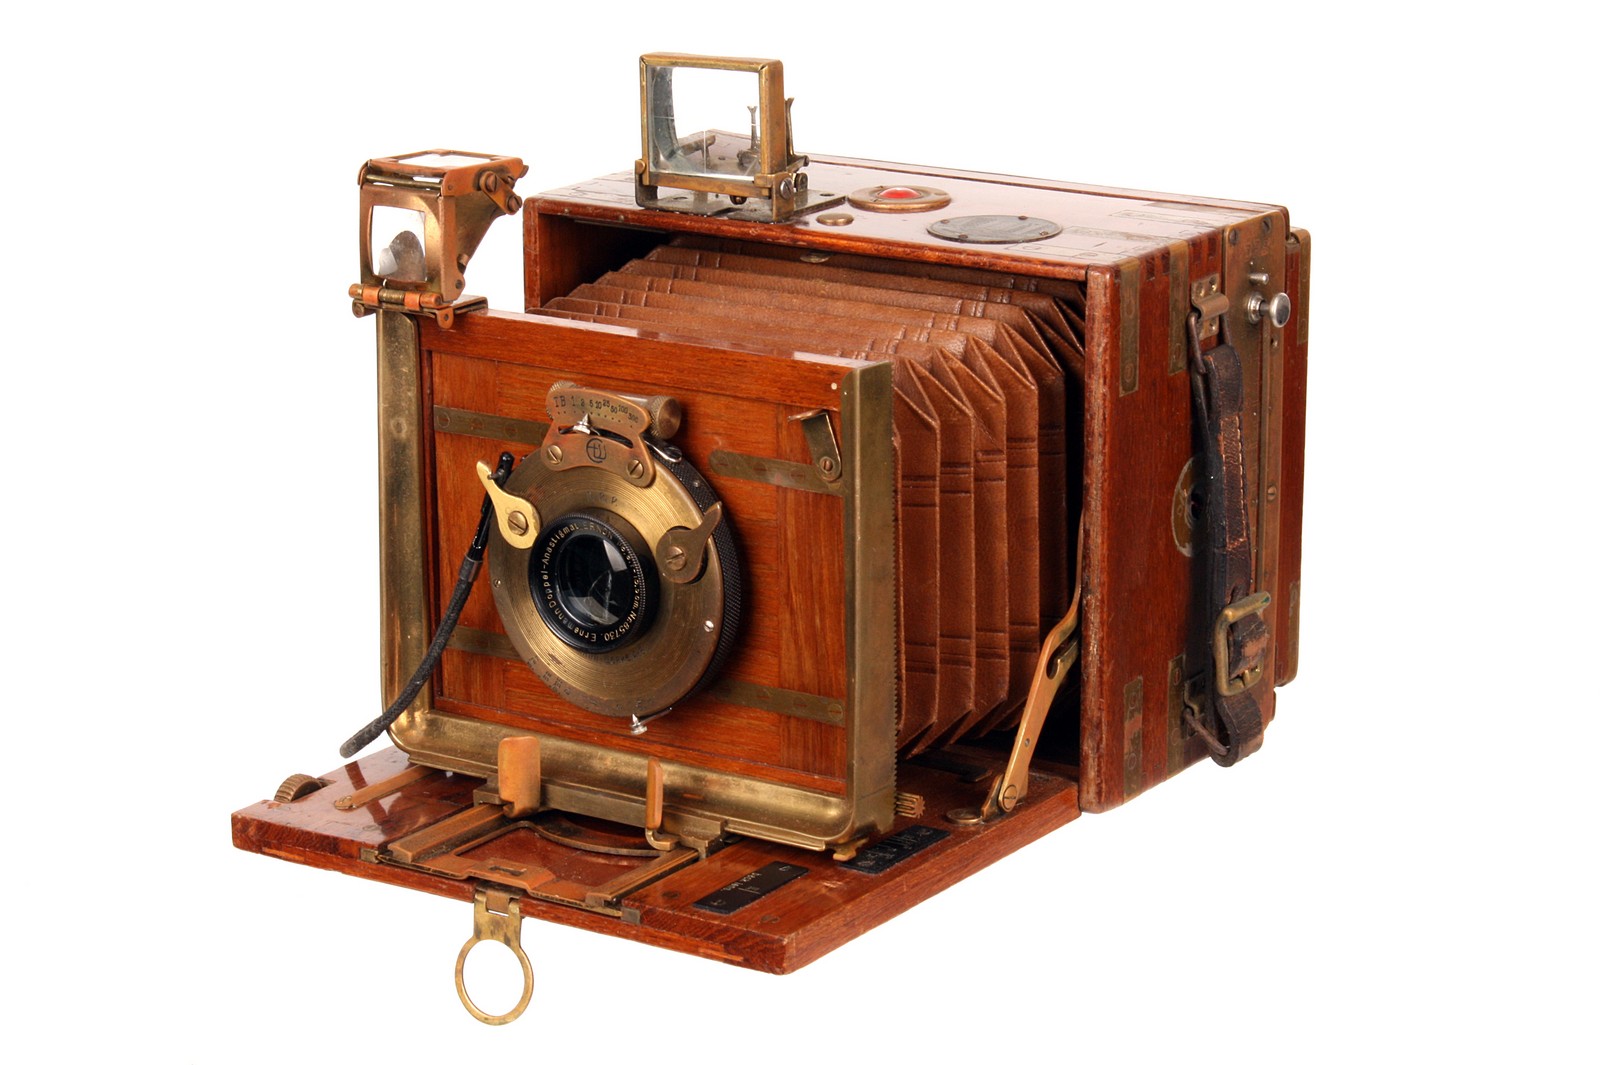 An Ernemann HEAG VI Tropical Camera, 9x12cm with Ernemann Ernon Doppel-Anastigmat f/6.8 135mm